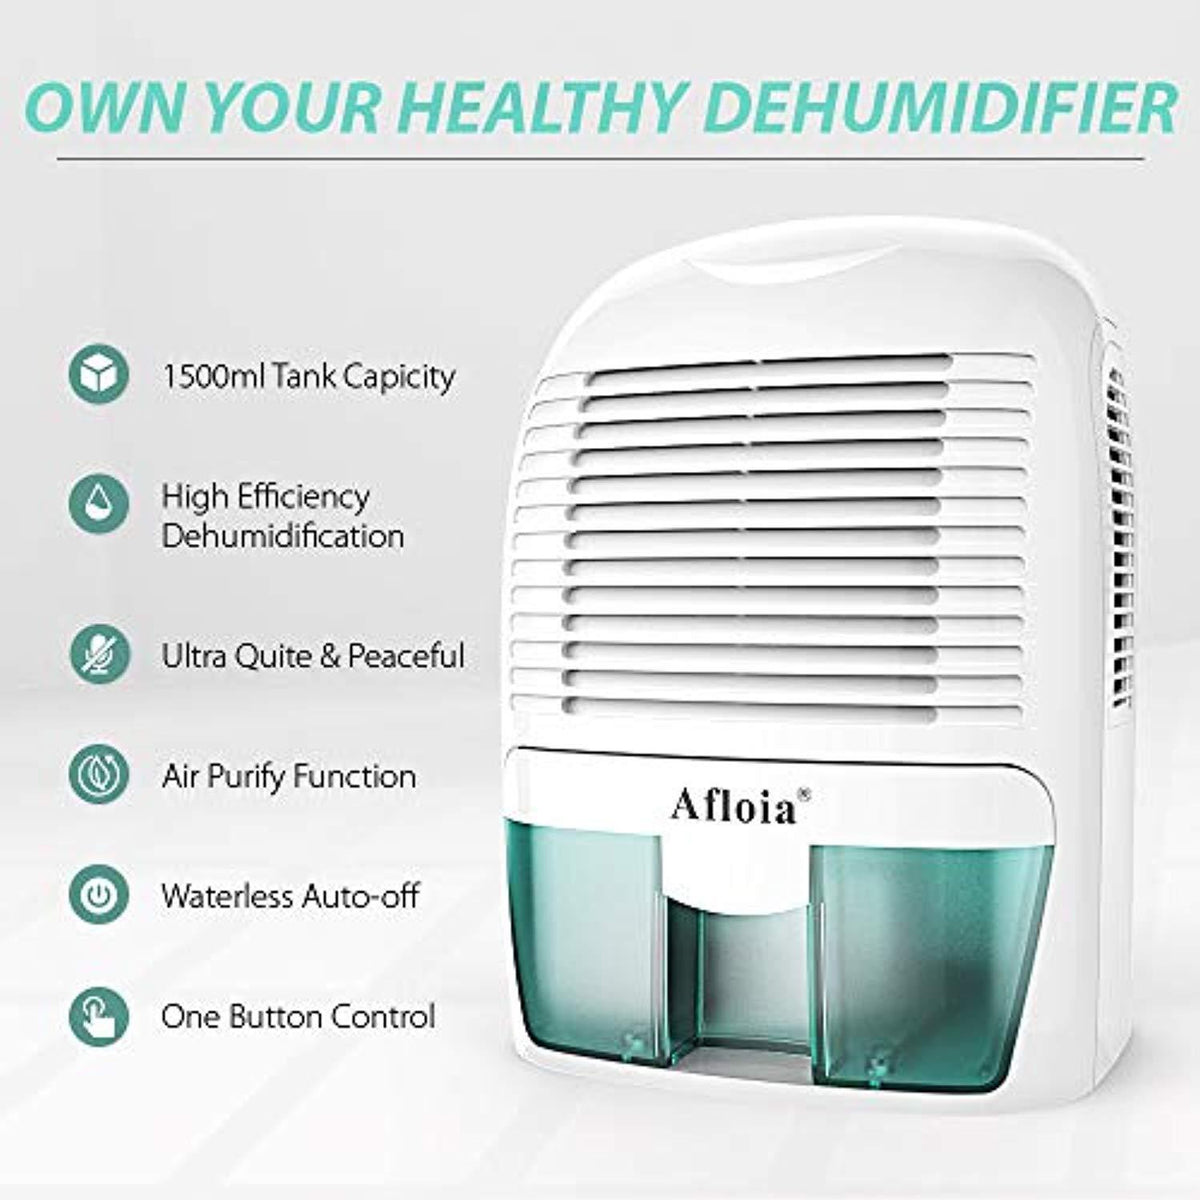 Afloia Dehumidifier for Home Portable Quiet Dehumidifier Home Electric Dehumidifiers for Bathroom Space Bedroom Kitchen Caravan Office Basement